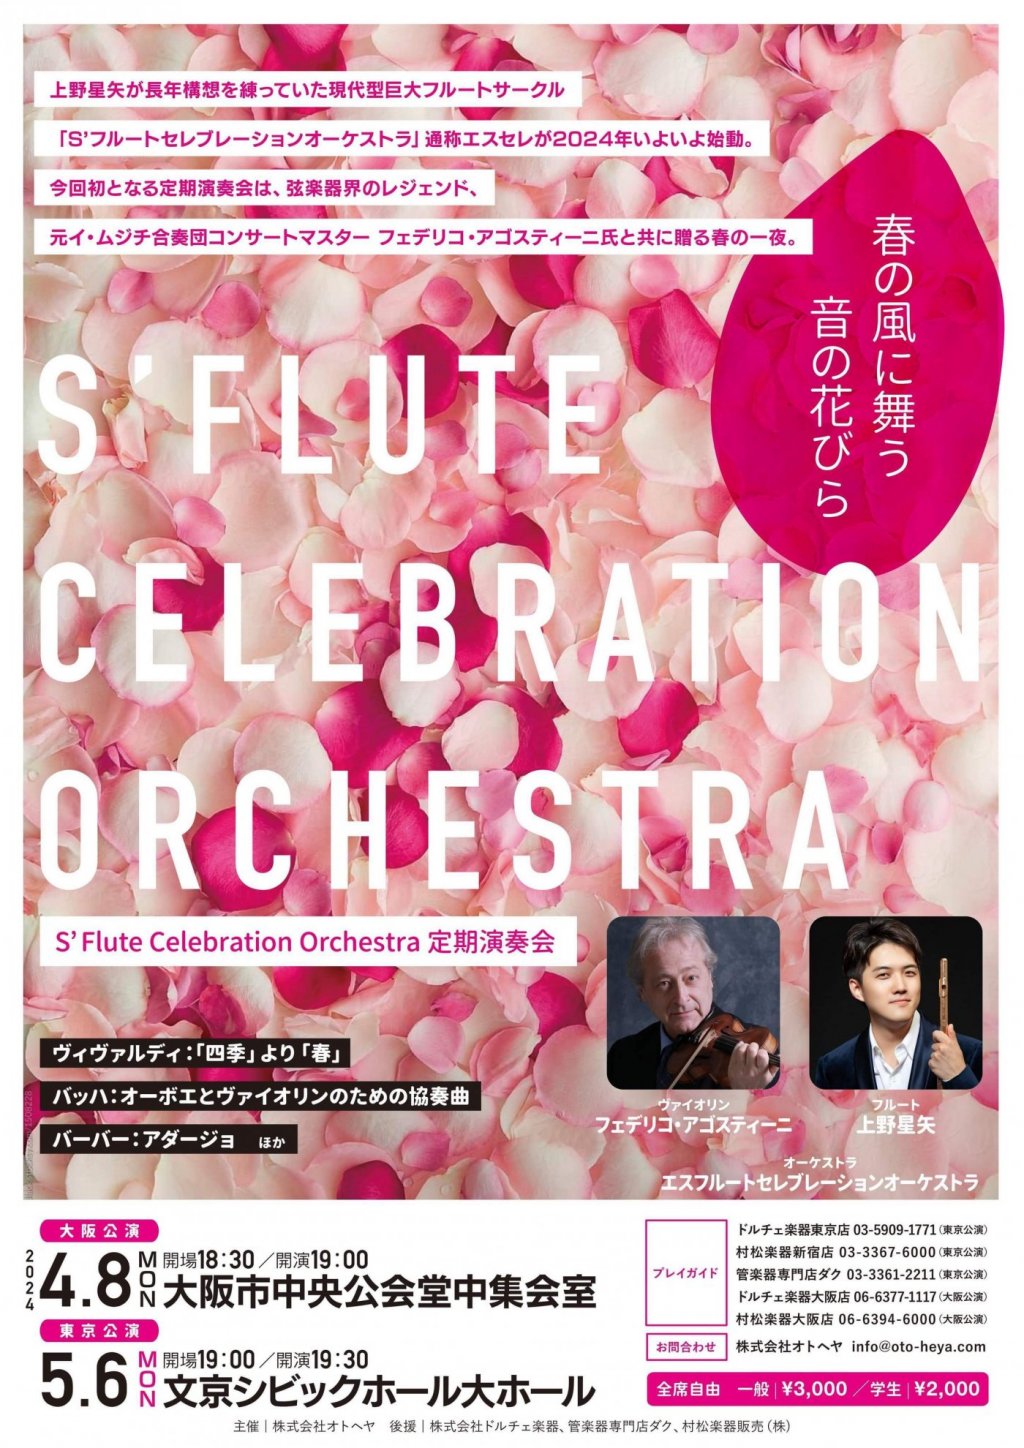 S' Flute Celebration Orchestra 定期演奏会【東京公演】